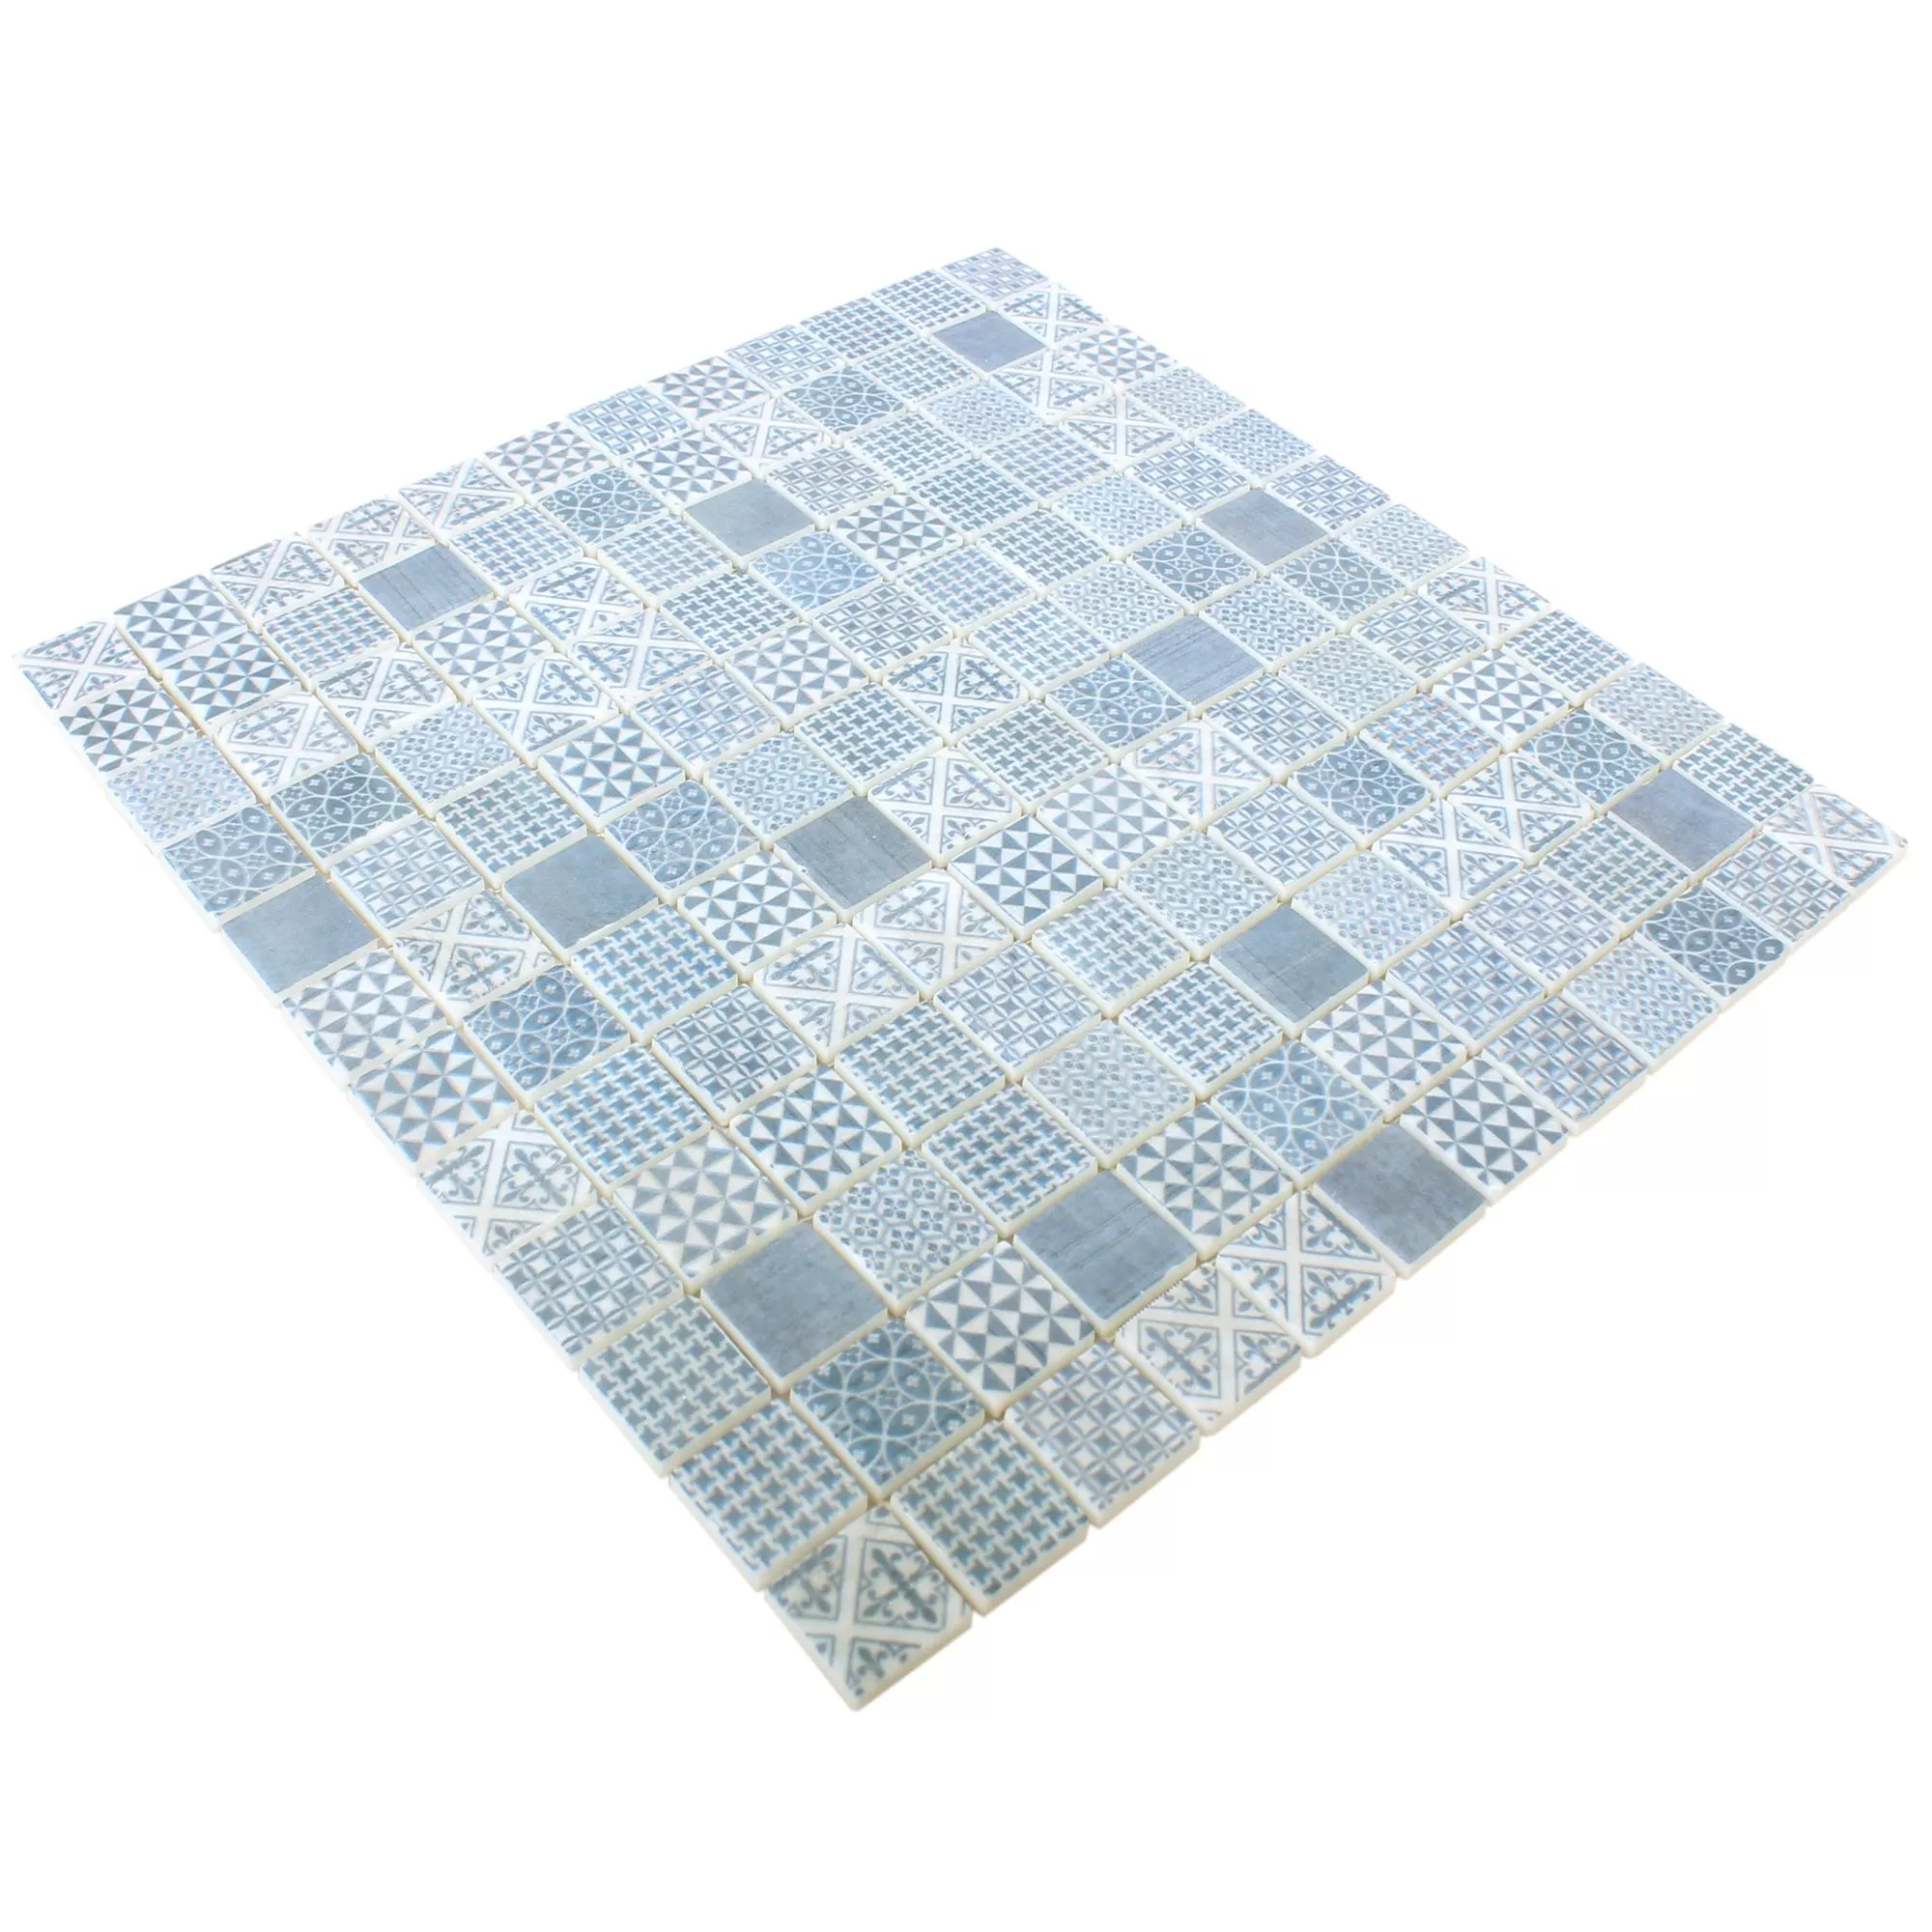 Sample Glass Mosaic Tiles Malard Blue